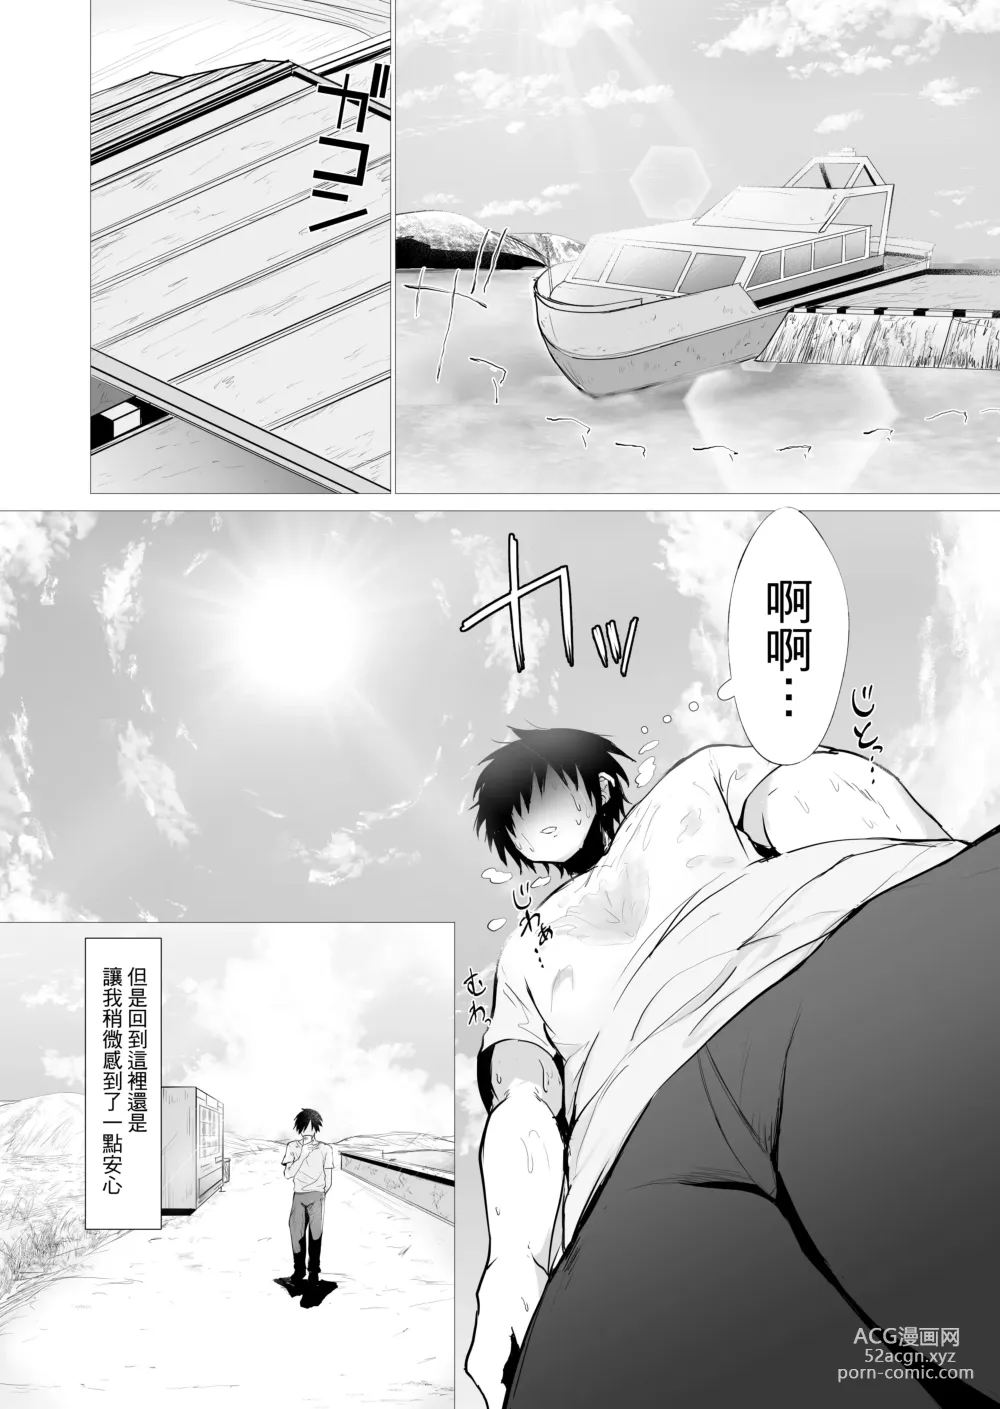 Page 6 of doujinshi Kimi no nikukan